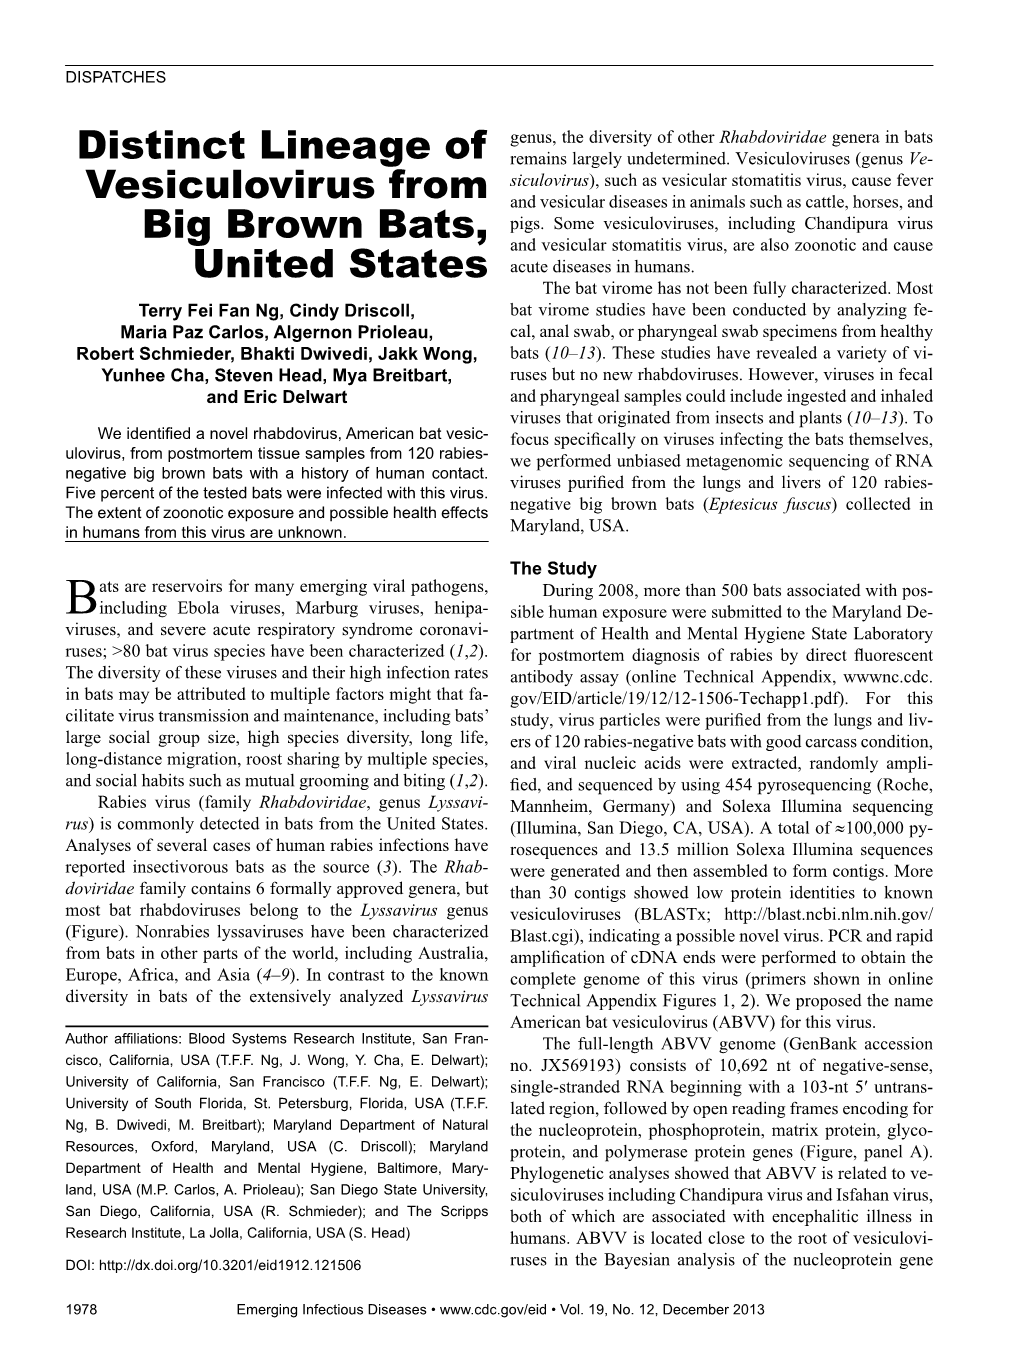 Distinct Lineage of Vesiculovirus from Big Brown Bats, United States